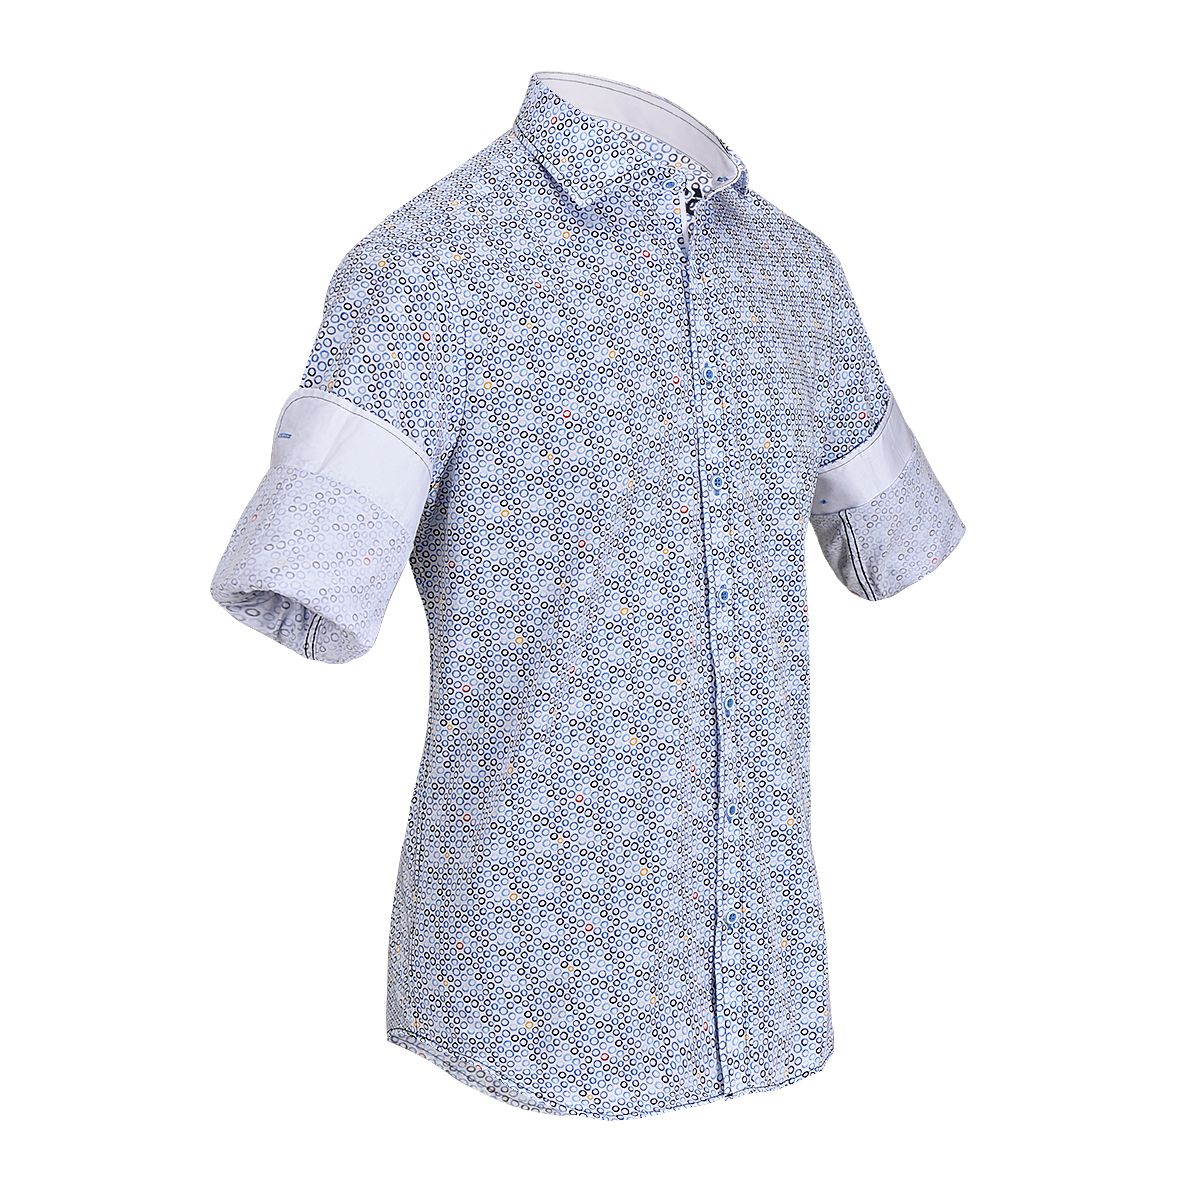 CM0W465 - Cuadra ocean casual fashion circle abstract shirt for men-CUADRA-Kuet-Cuadra-Boots